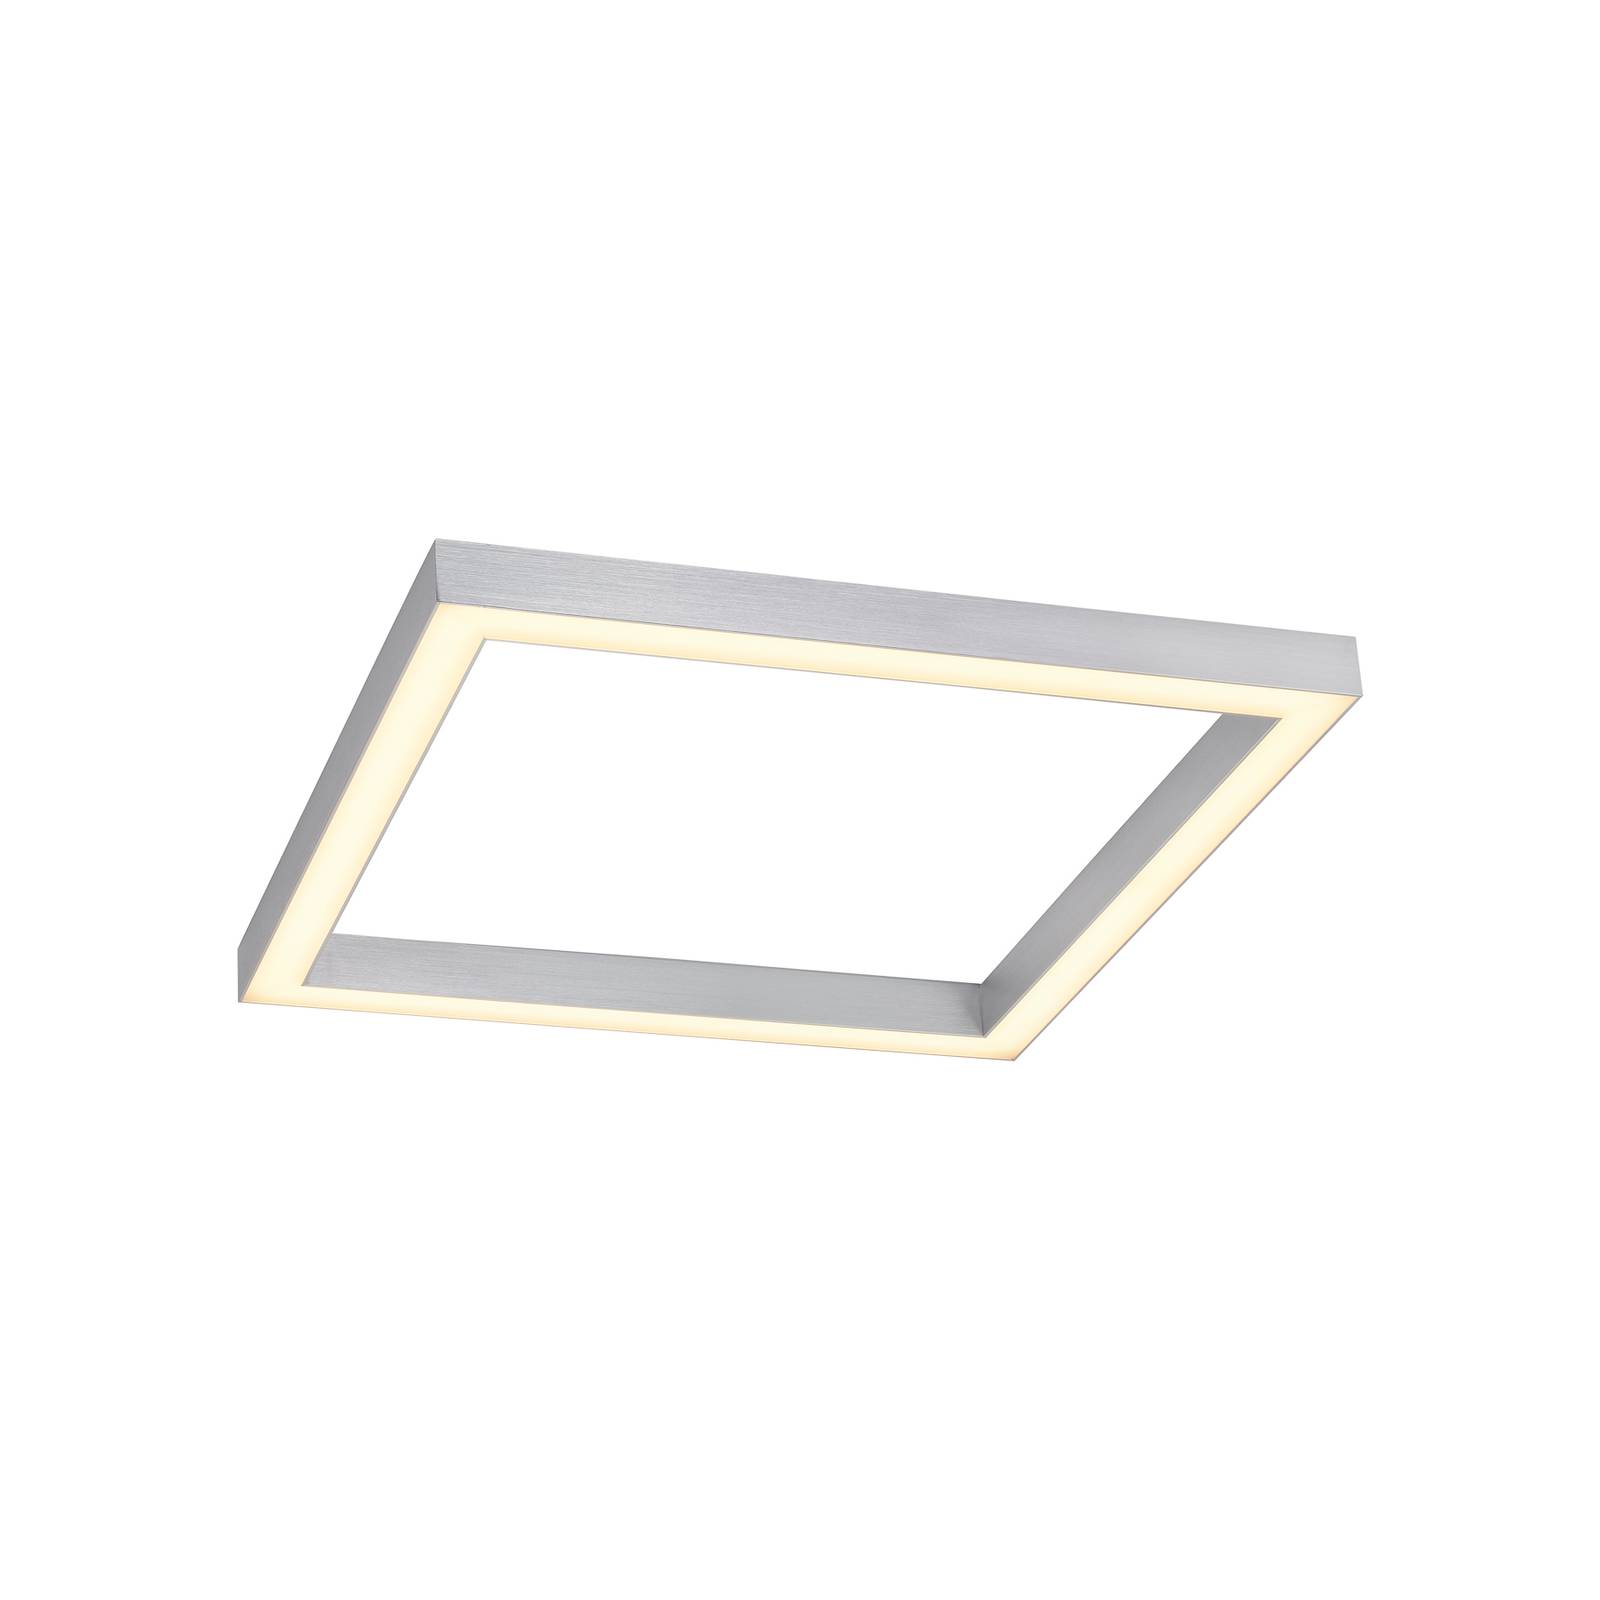 Image of PURE Lines plafonnier LED carré aluminium 4012248357910